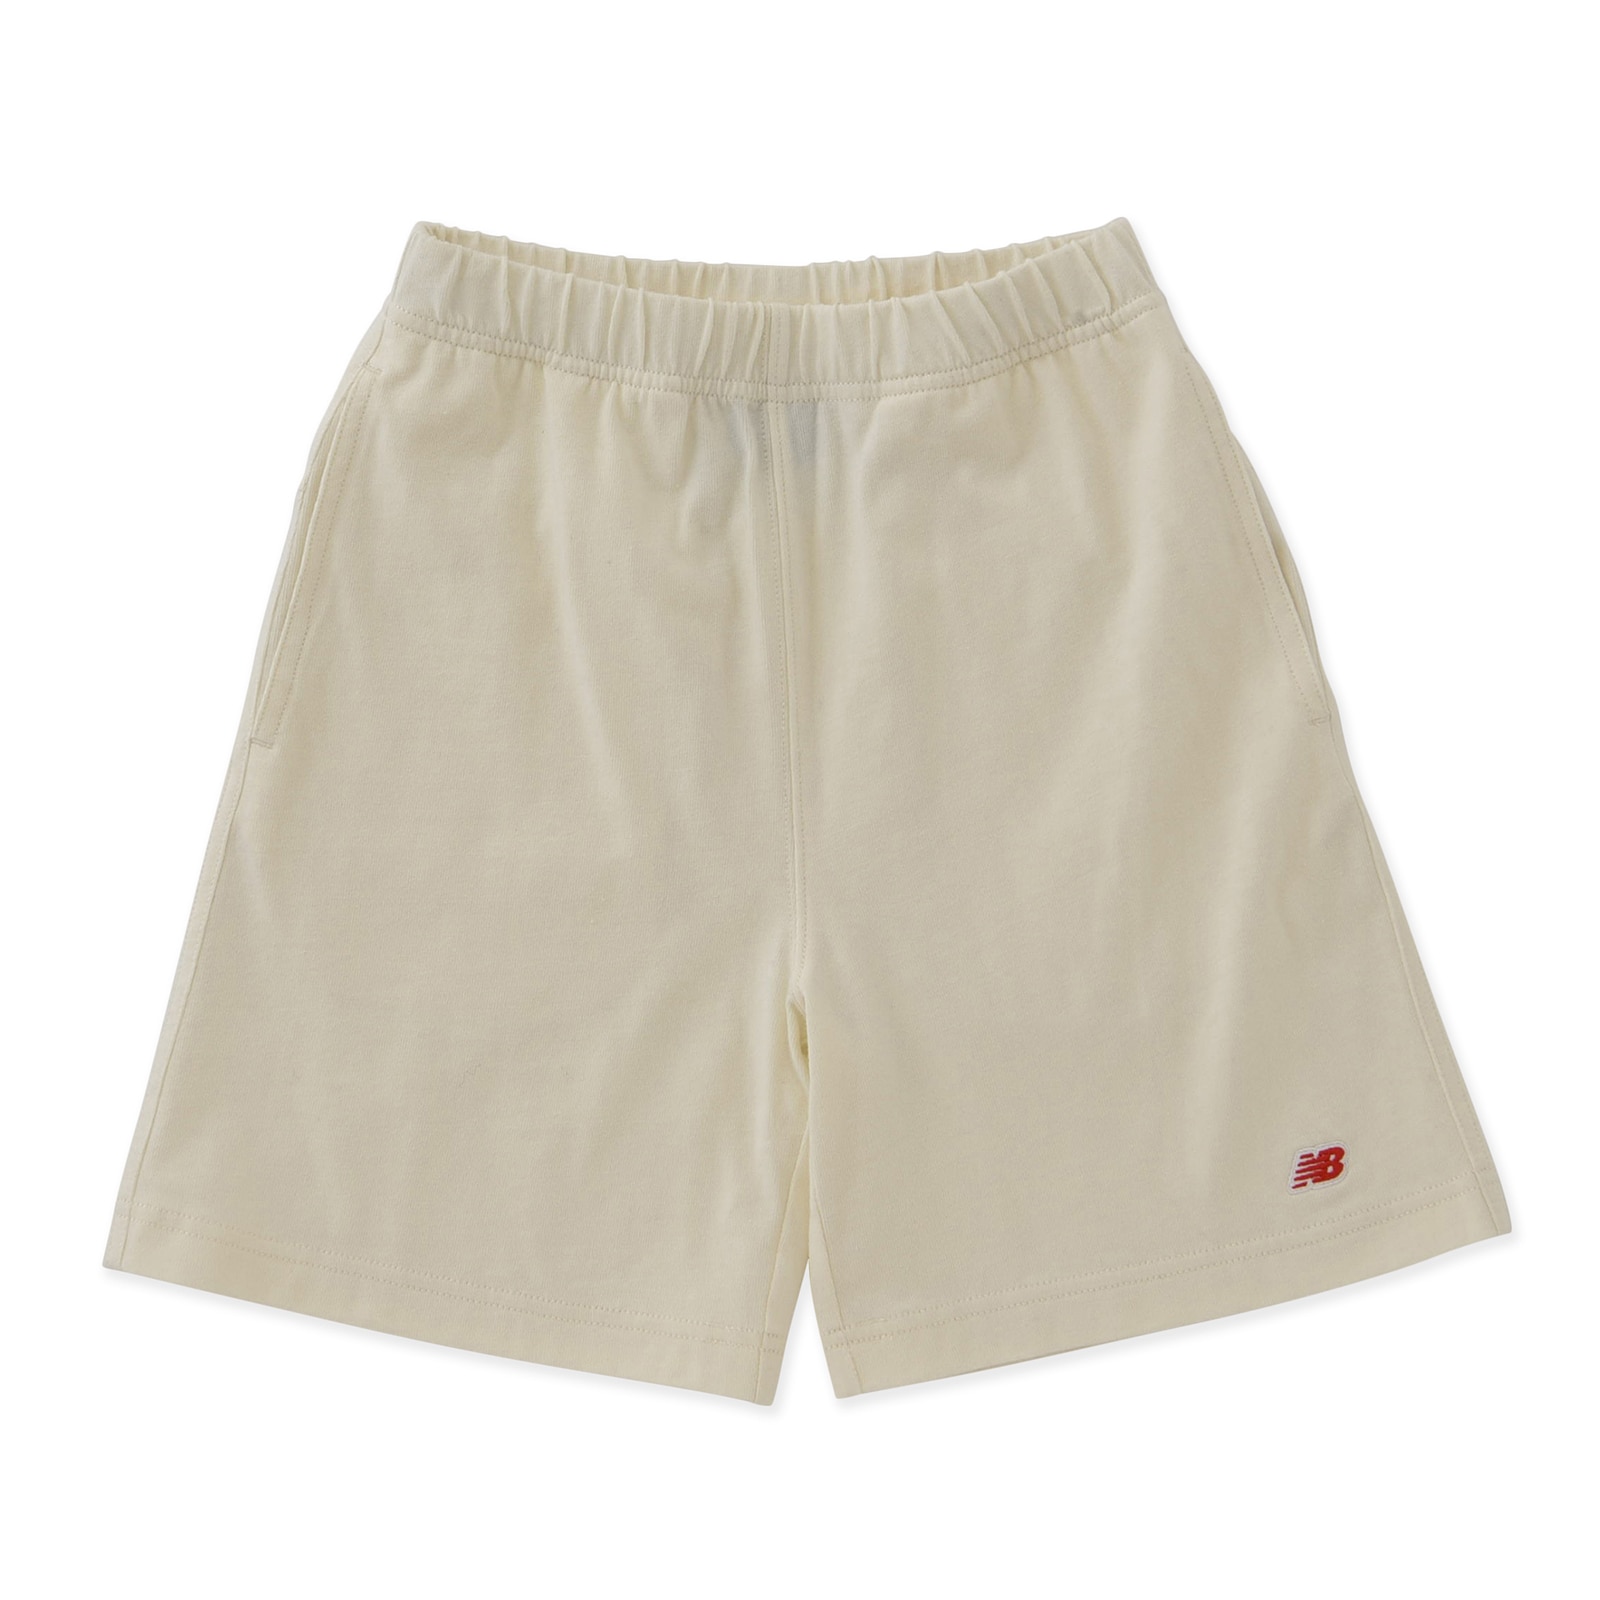 Linear logo shorts